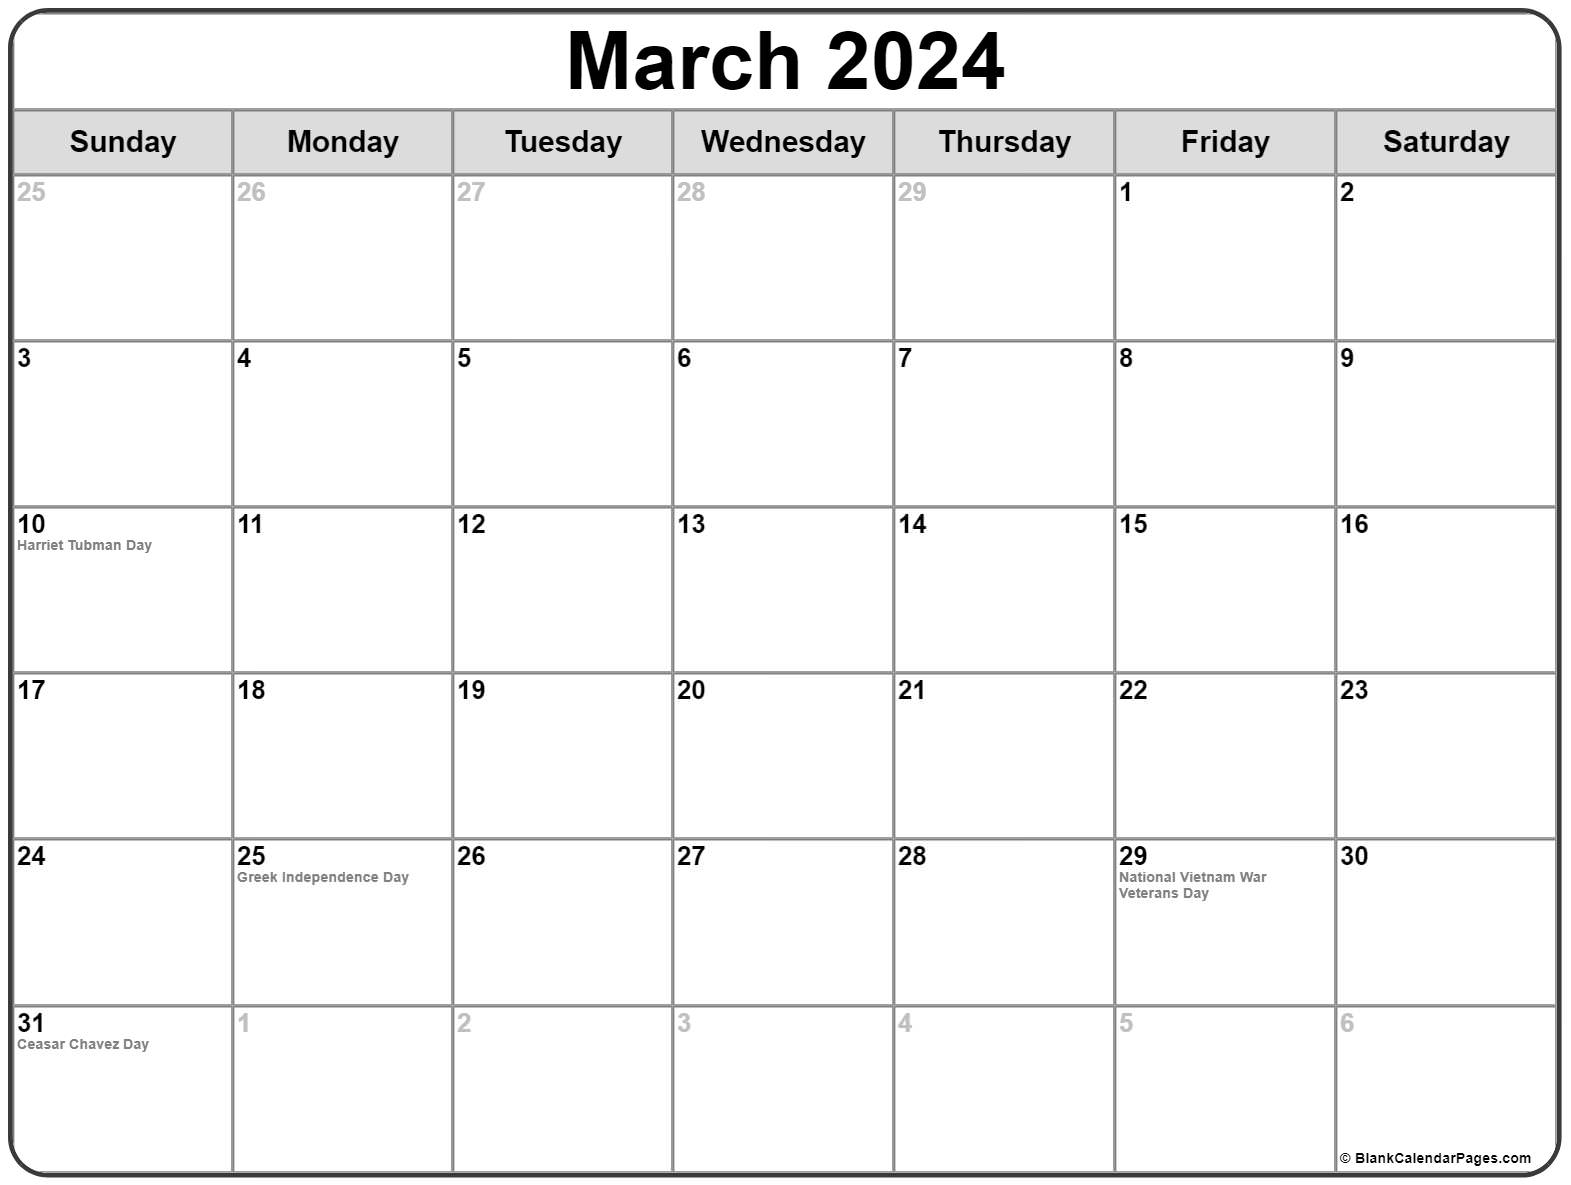 2023 Calendar Federal Holidays March 2023 Calendar Hot Sex Picture 6471